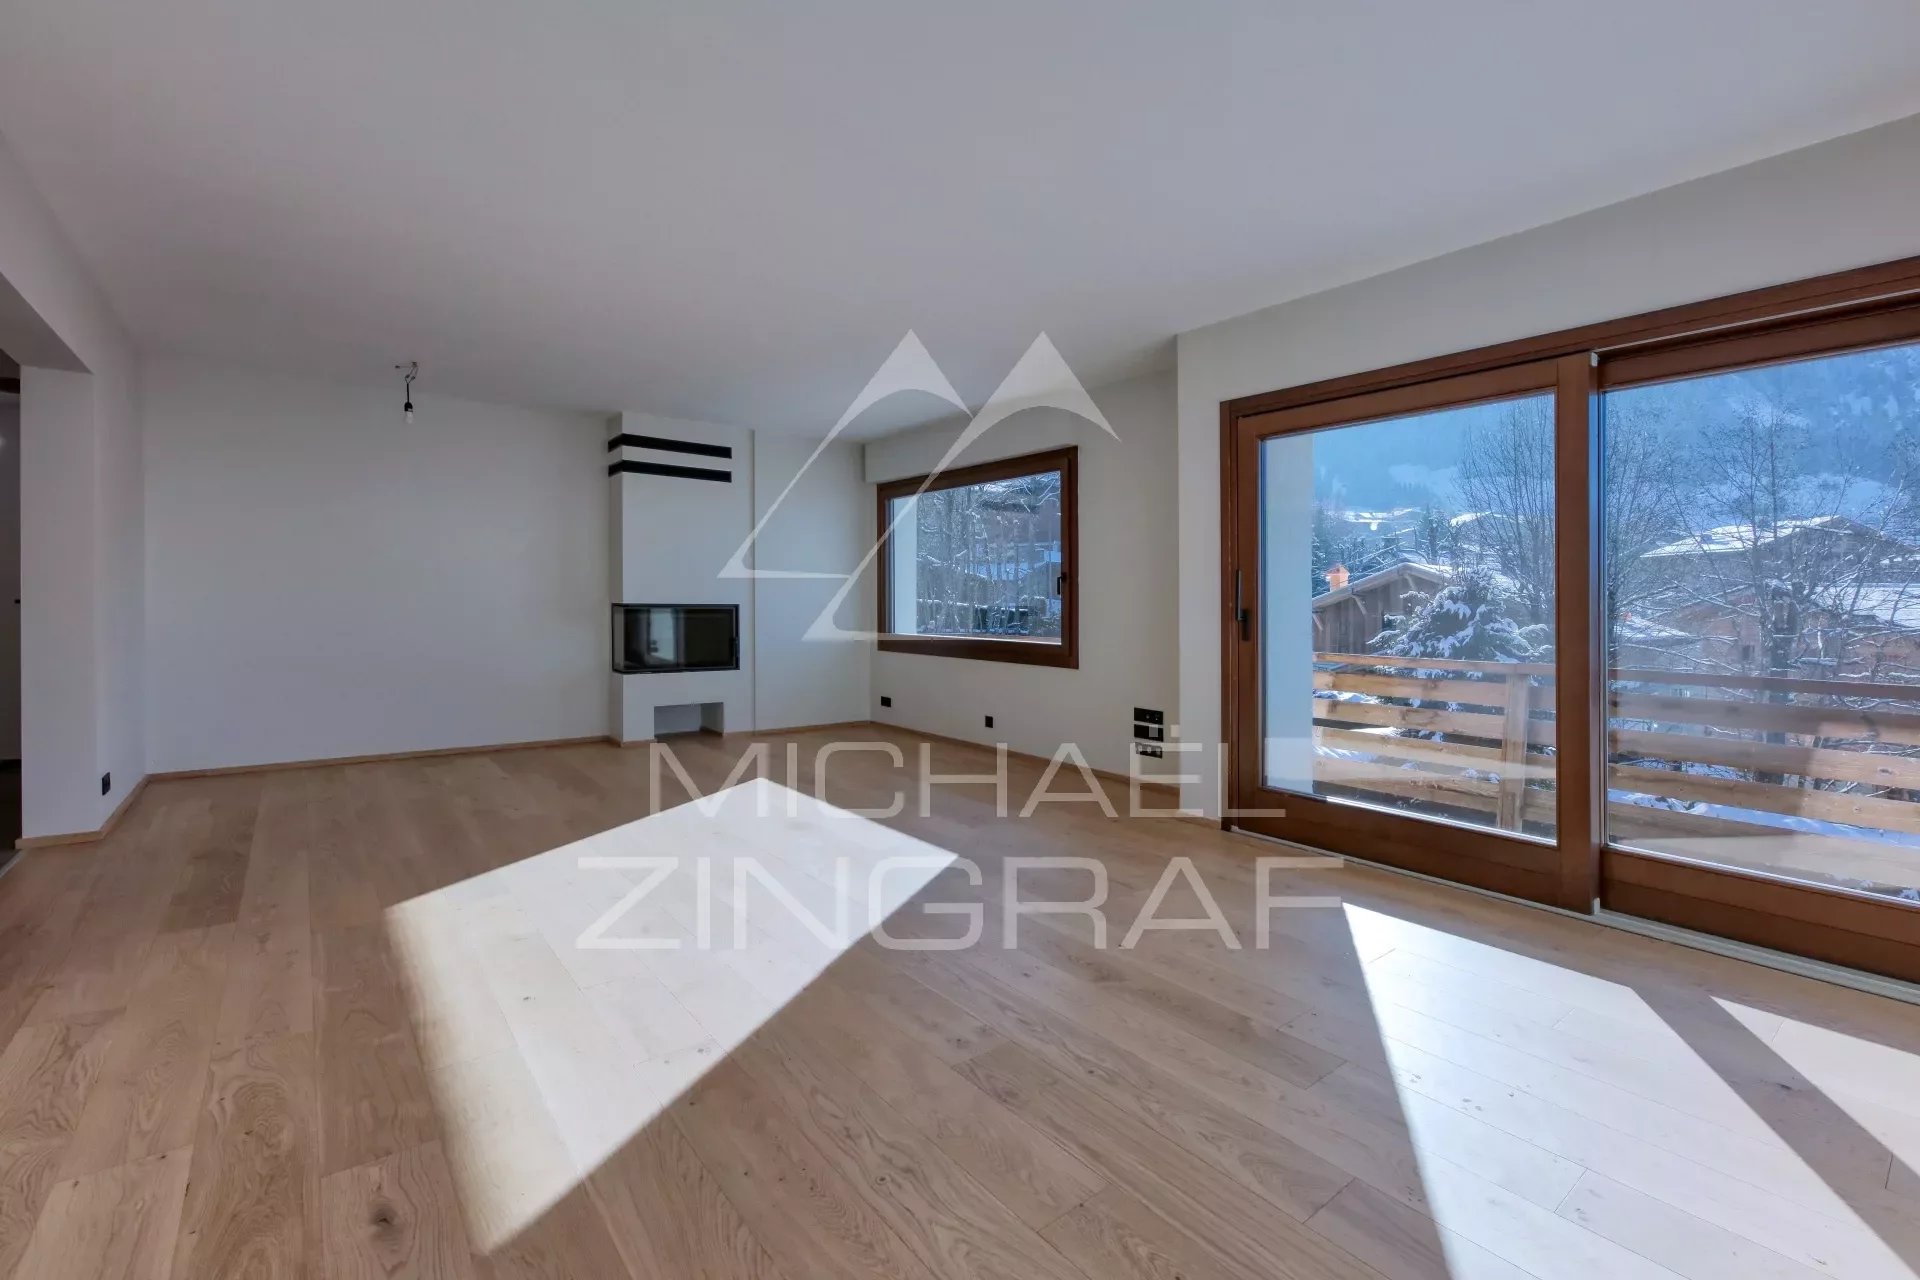 Rochebrune - Three bedroom's Apartment - Lift, Quiet, Panoramic view